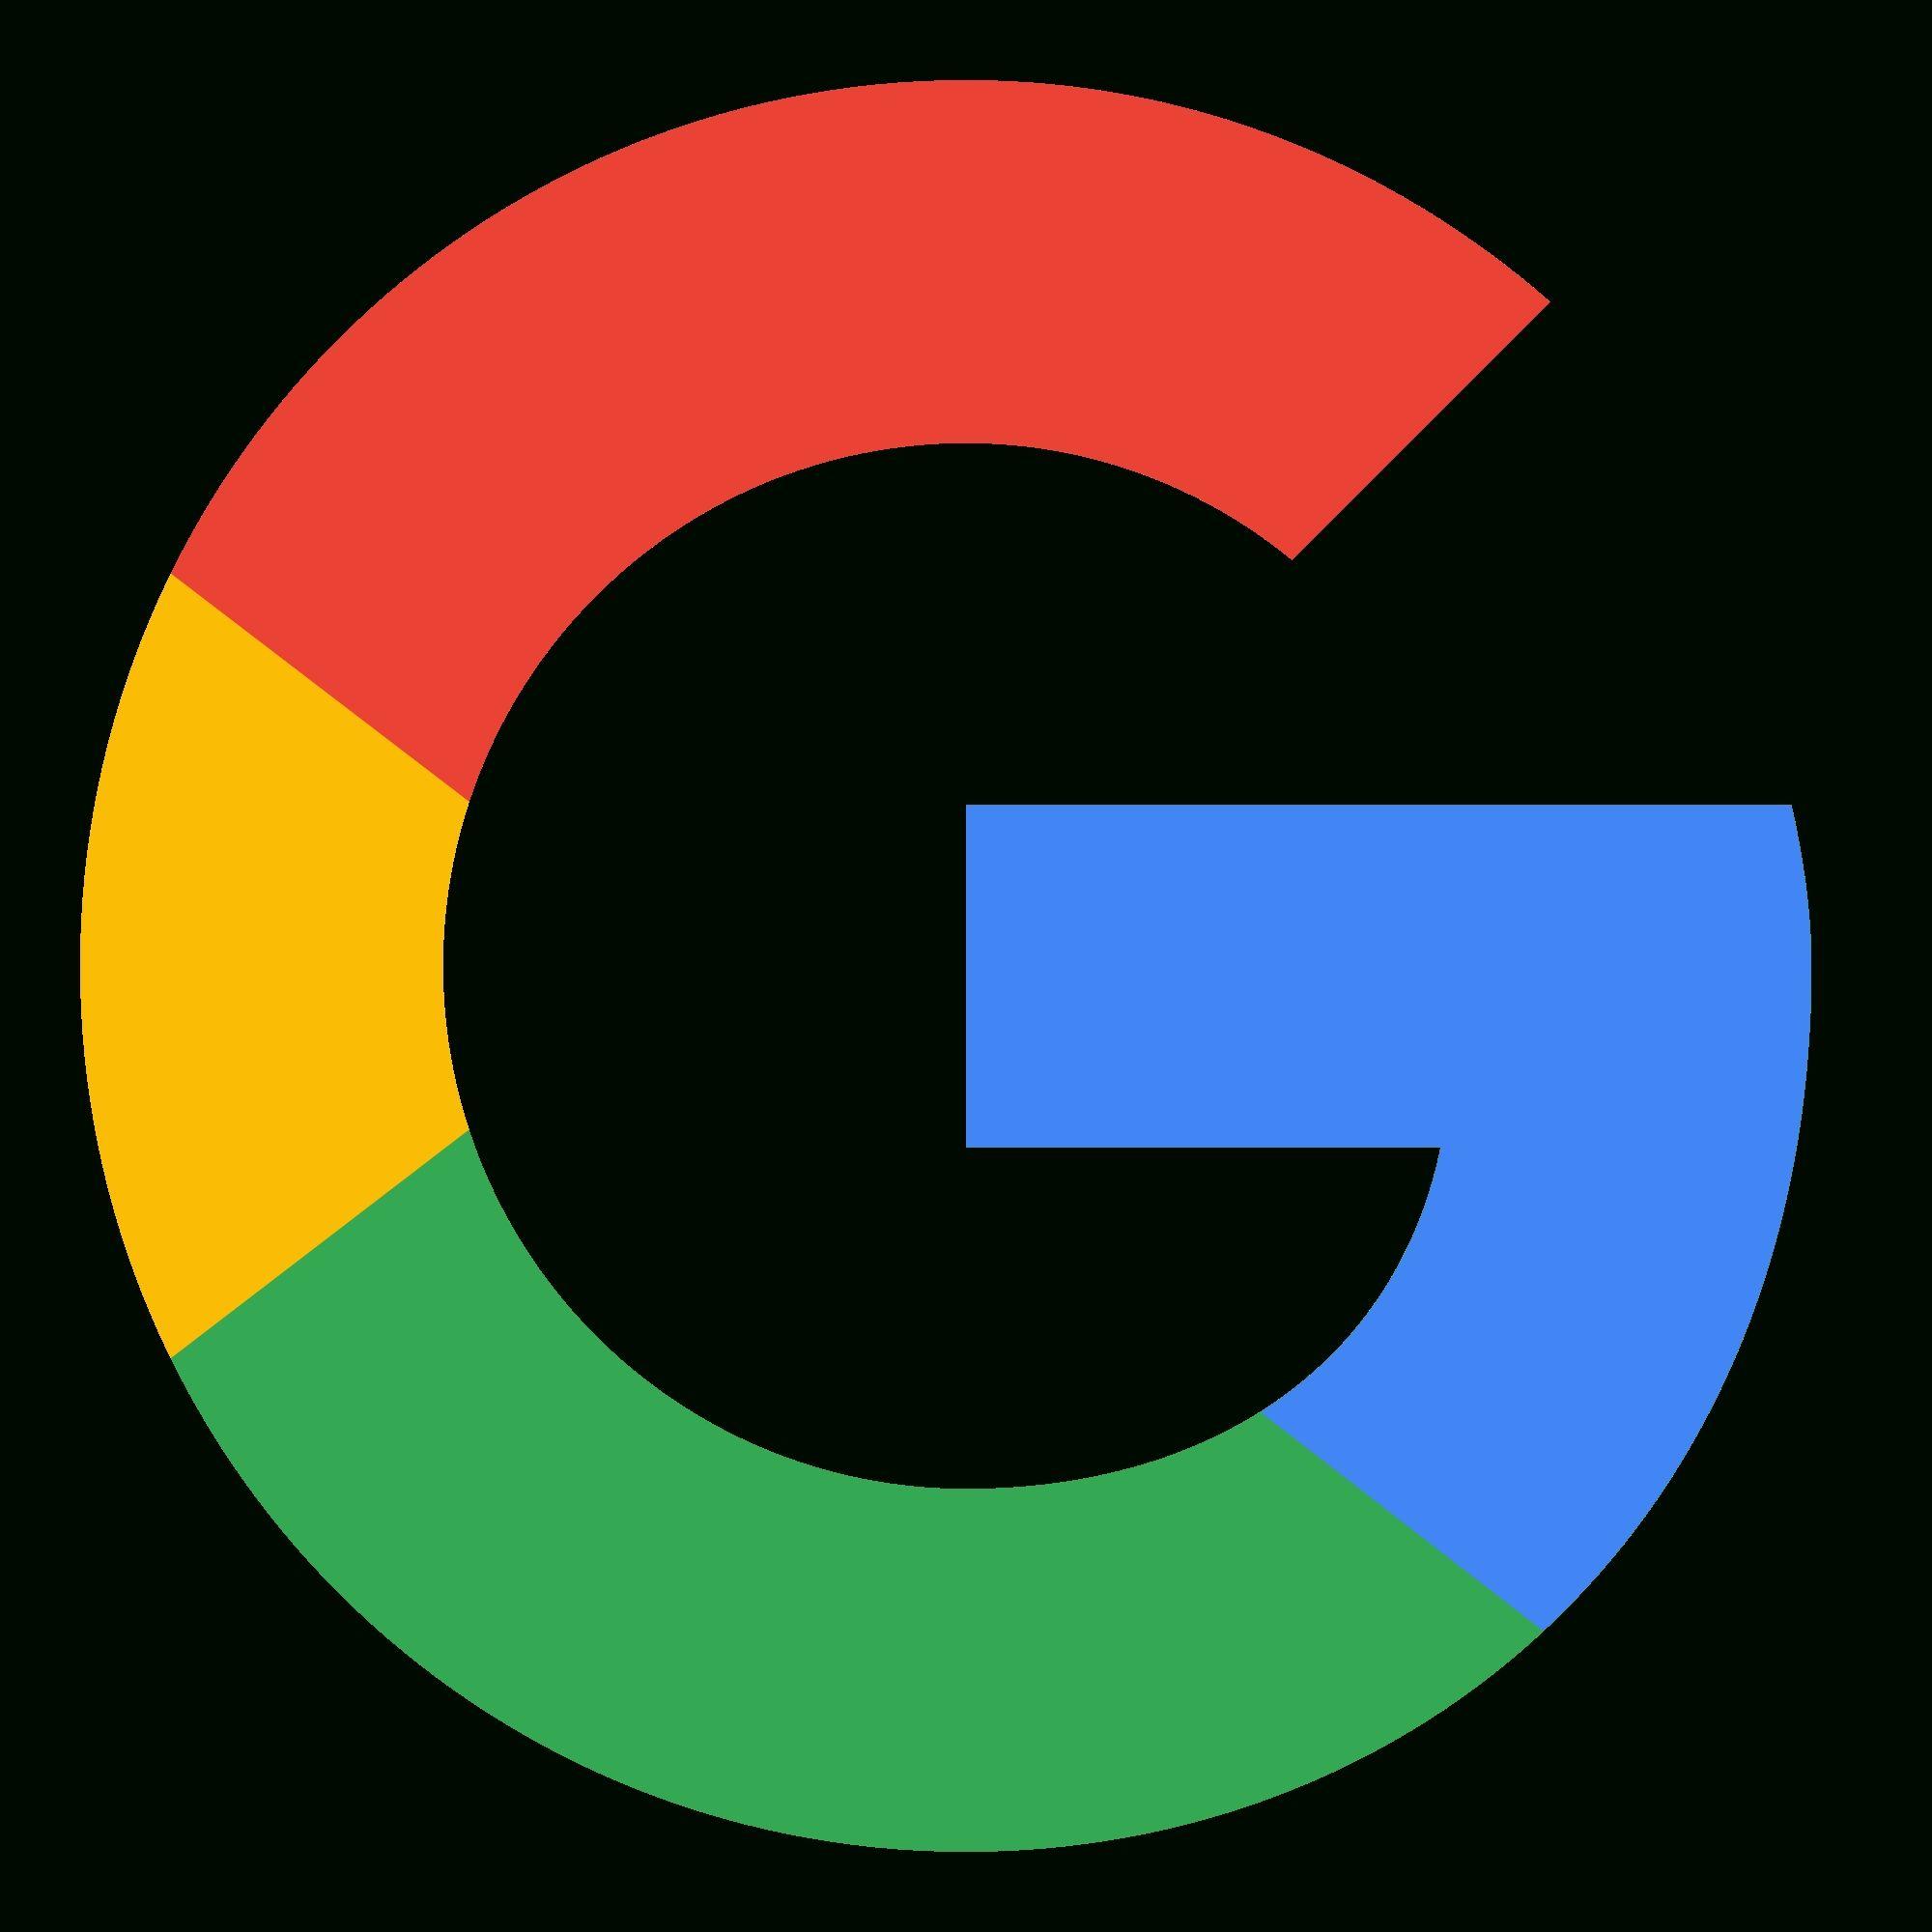 Google Logo Black Backgrounds - Wallpaper Cave